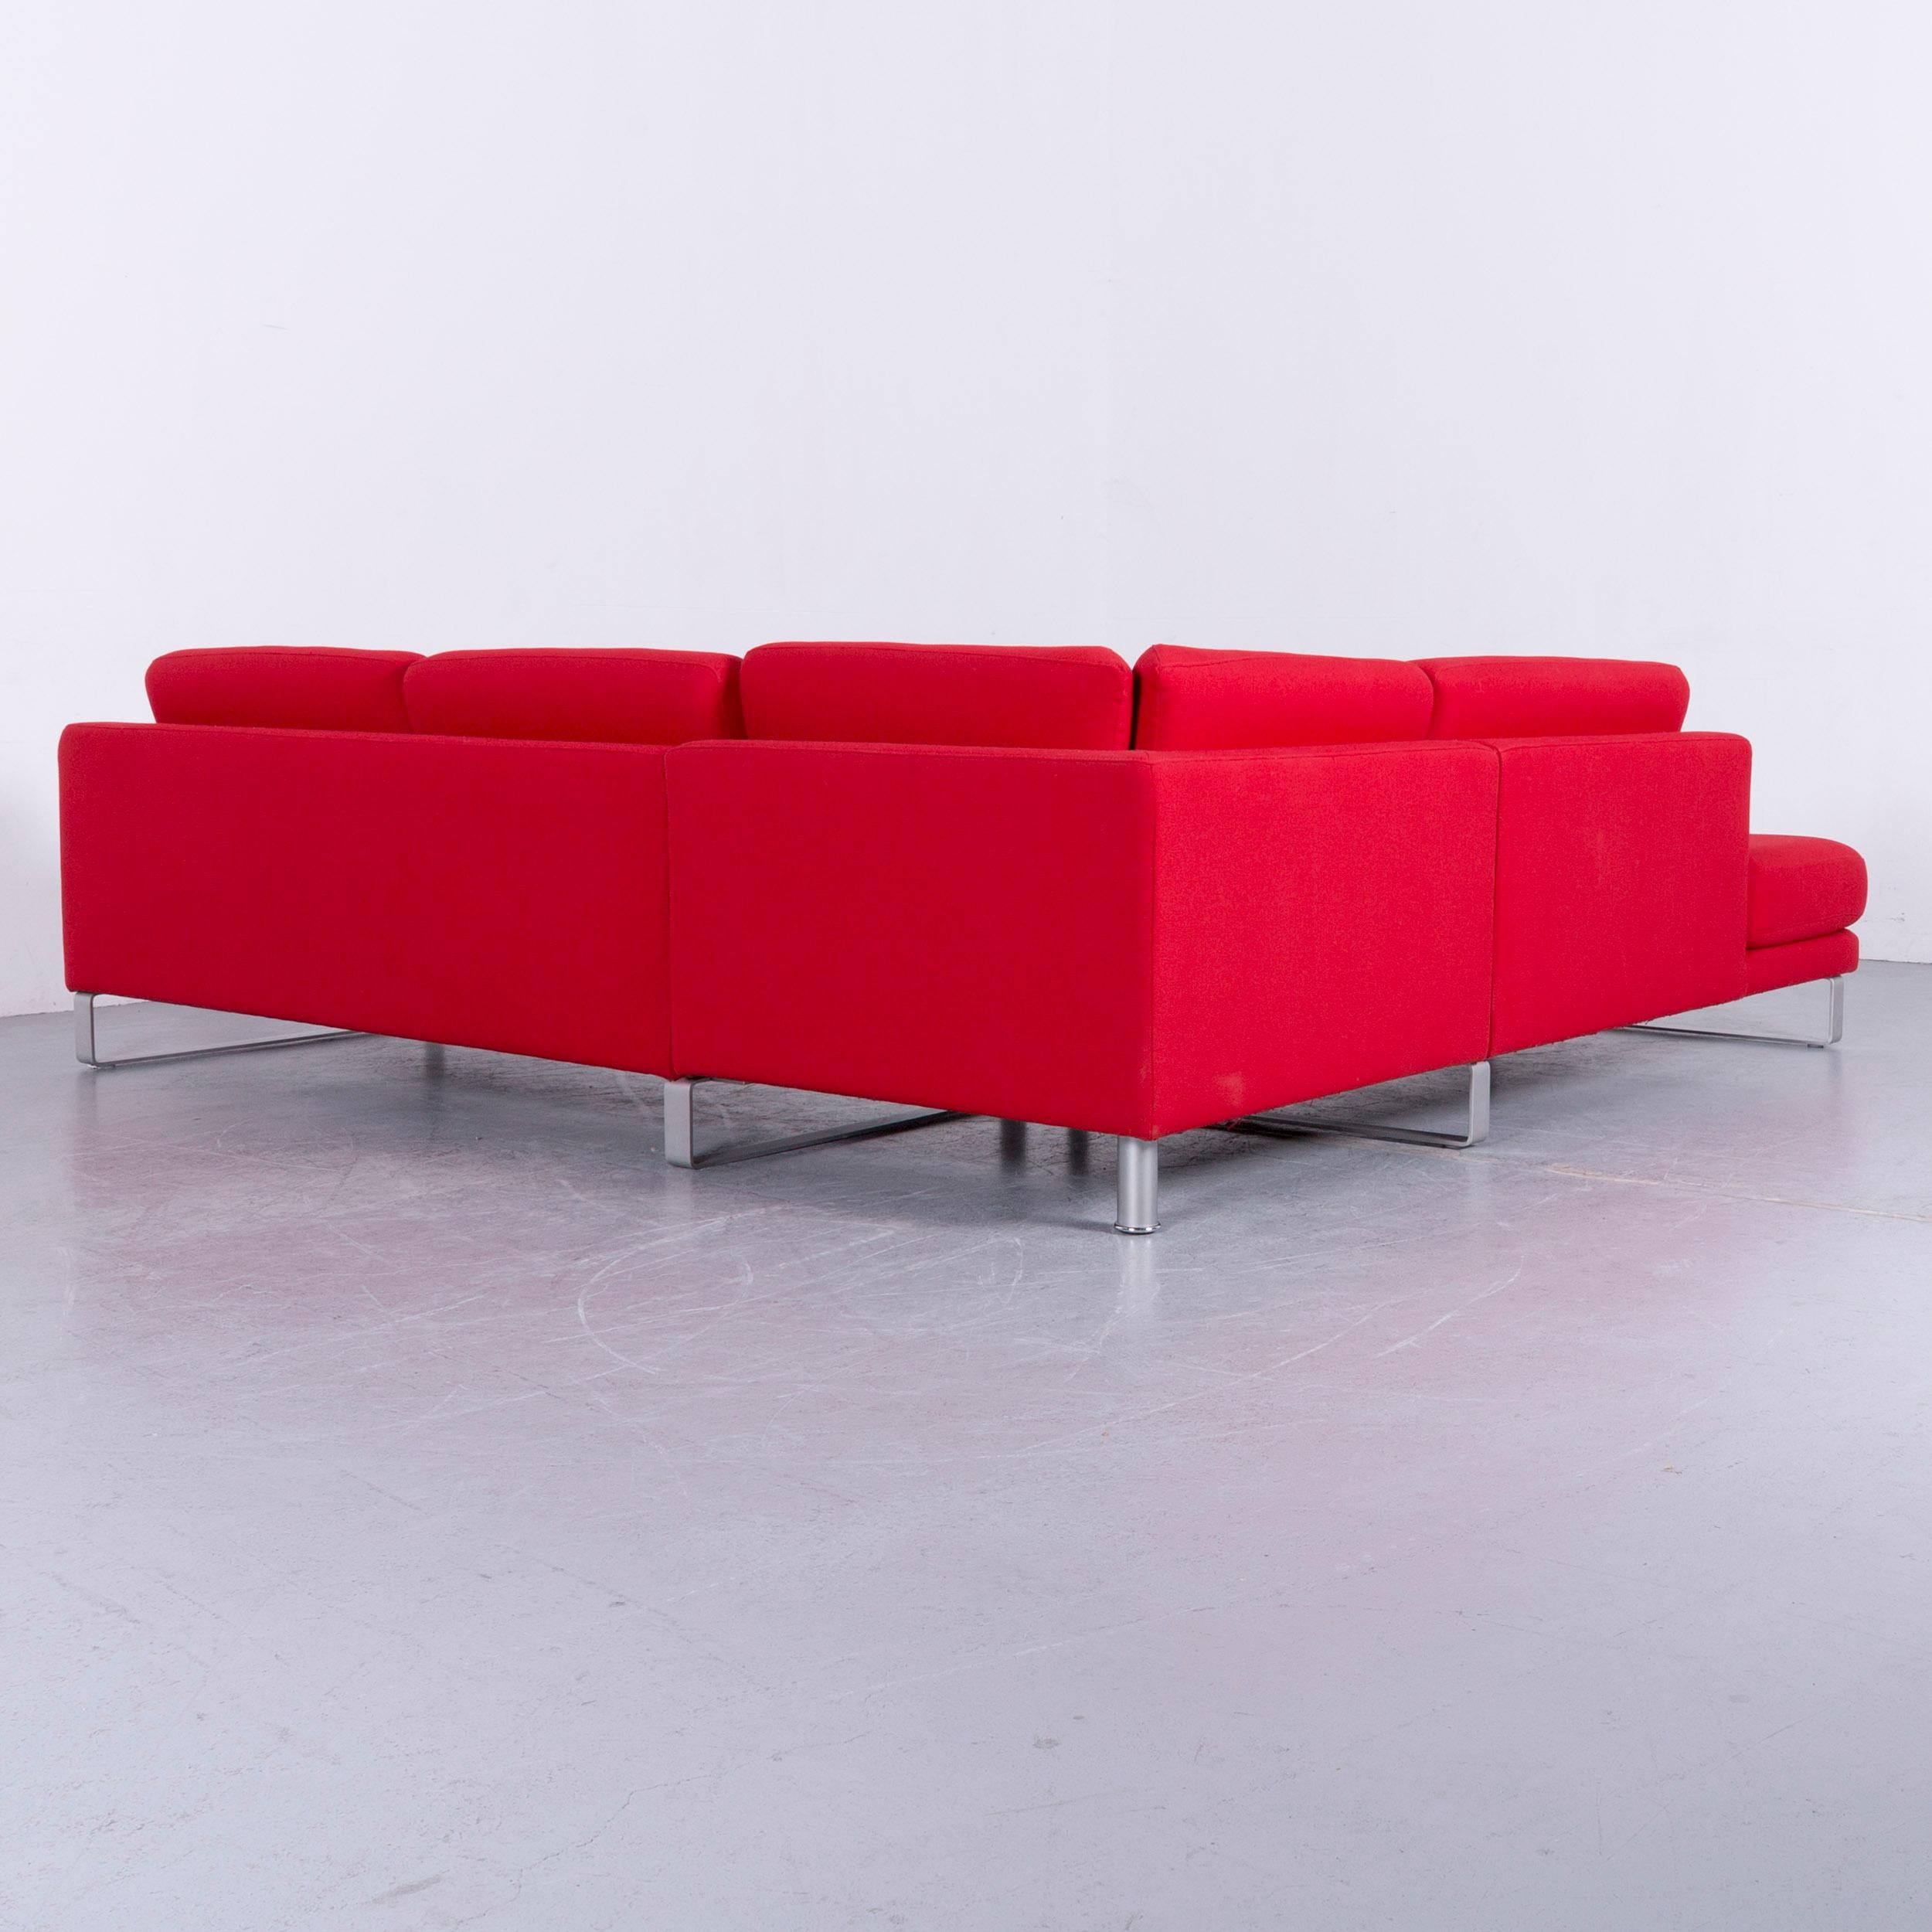 Rolf Benz Designer Ego Fabricr Corner-Sofa Red Four-Seat Couch For Sale 4